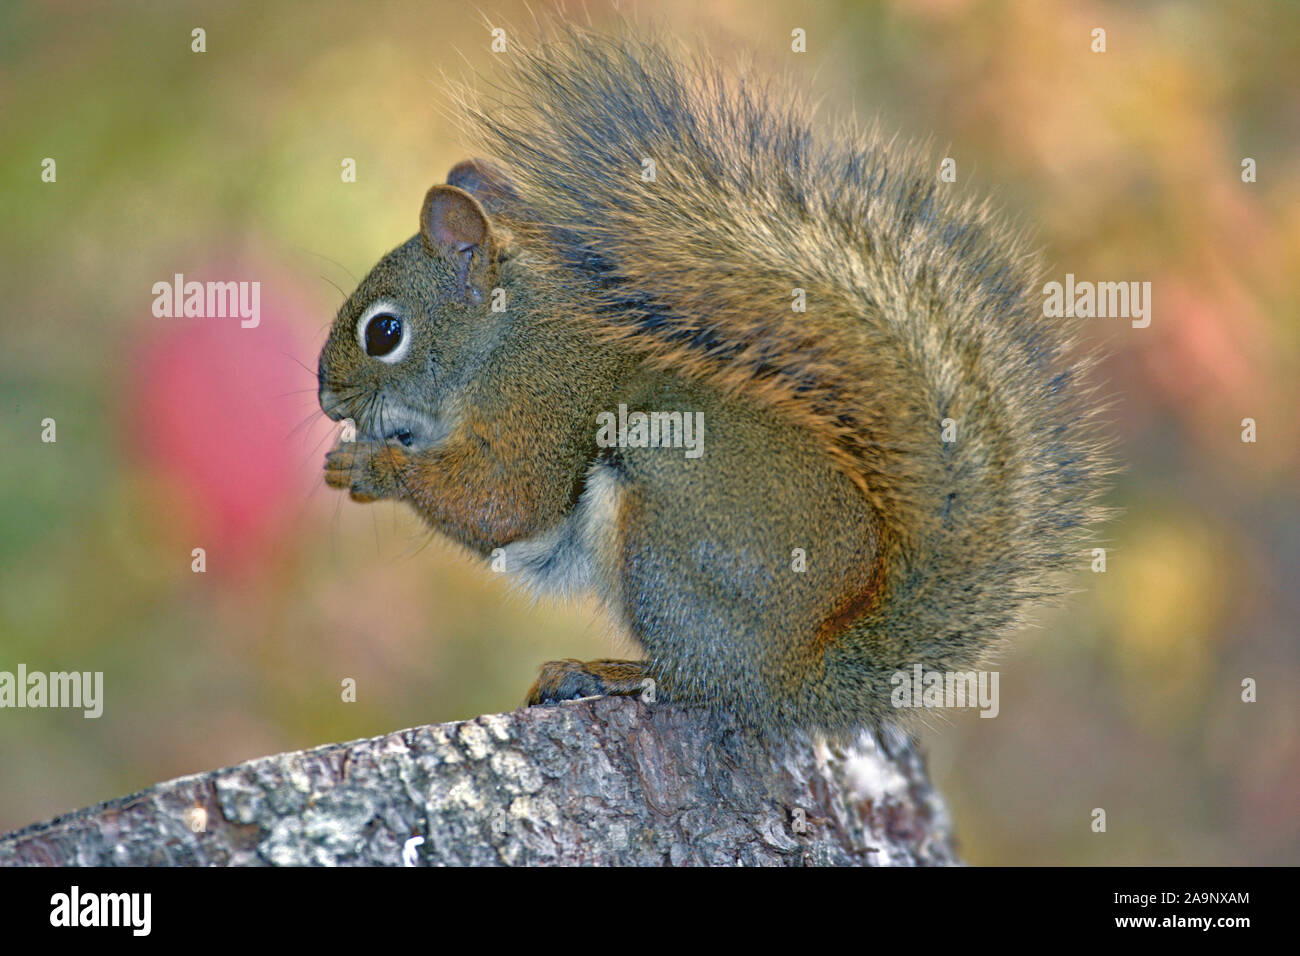 Red Squirrel sitting on tree stump feeding, portrait, profile view. Stock Photo